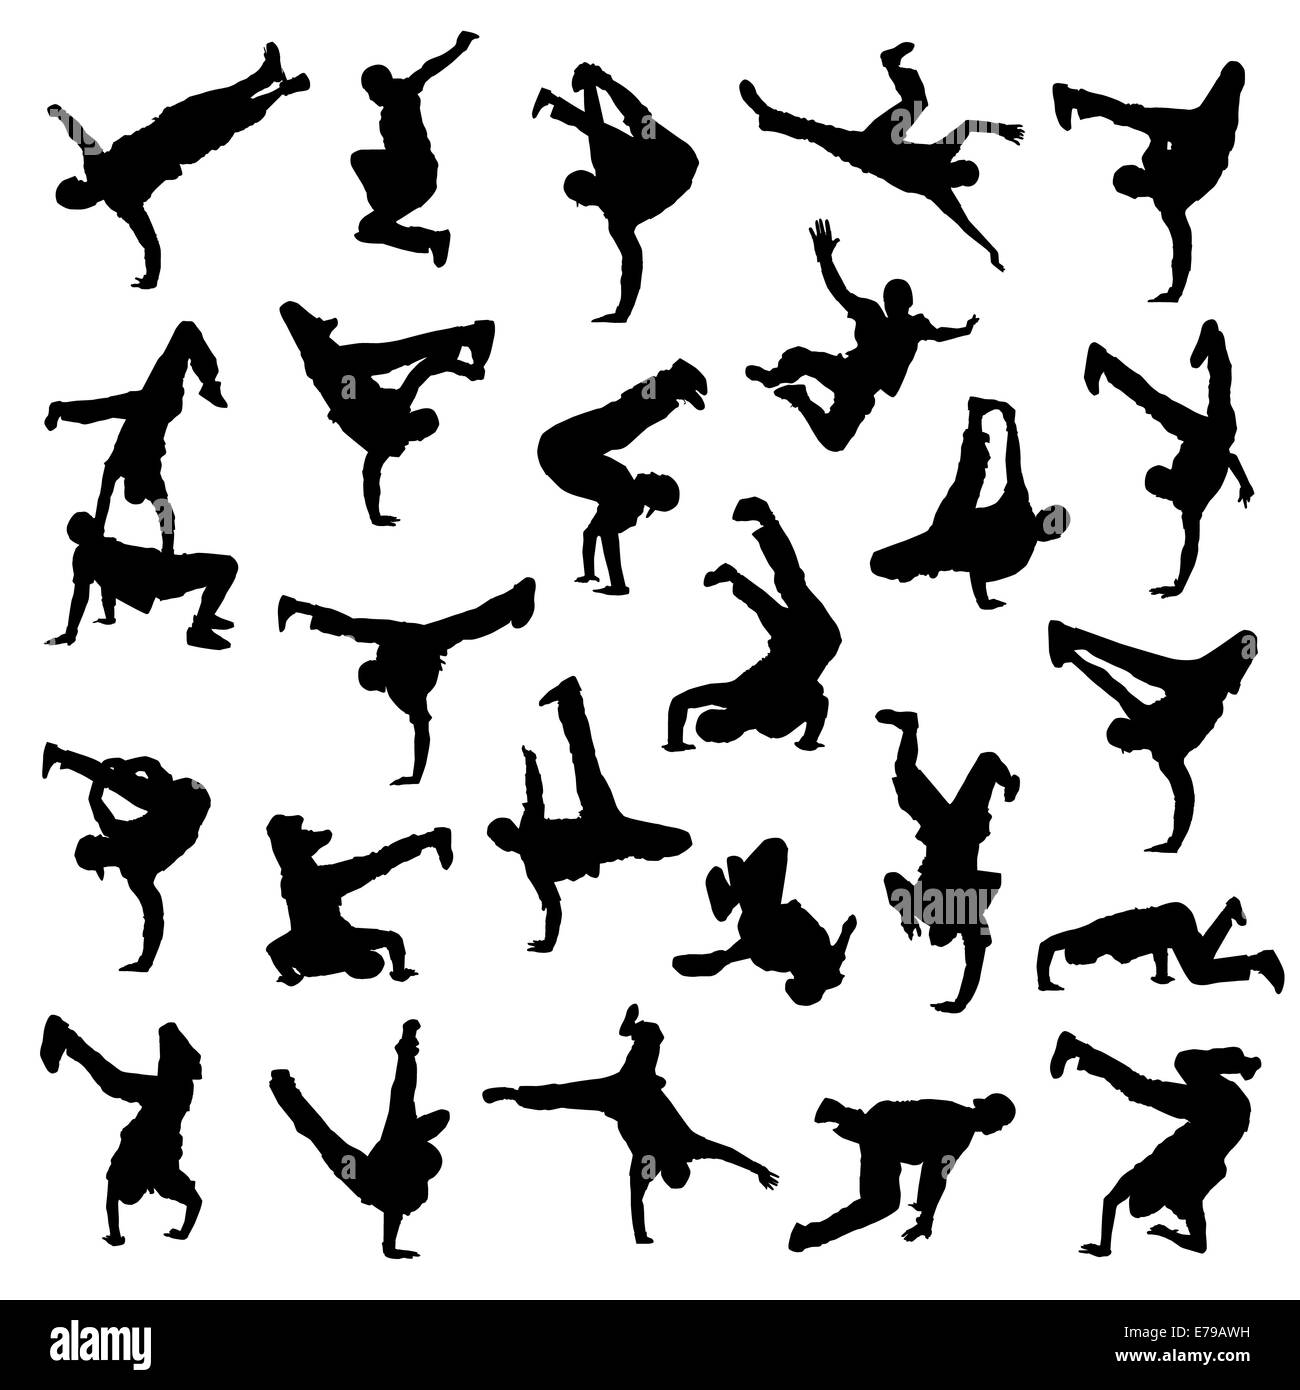 Break Dance silhouettes Stock Photo